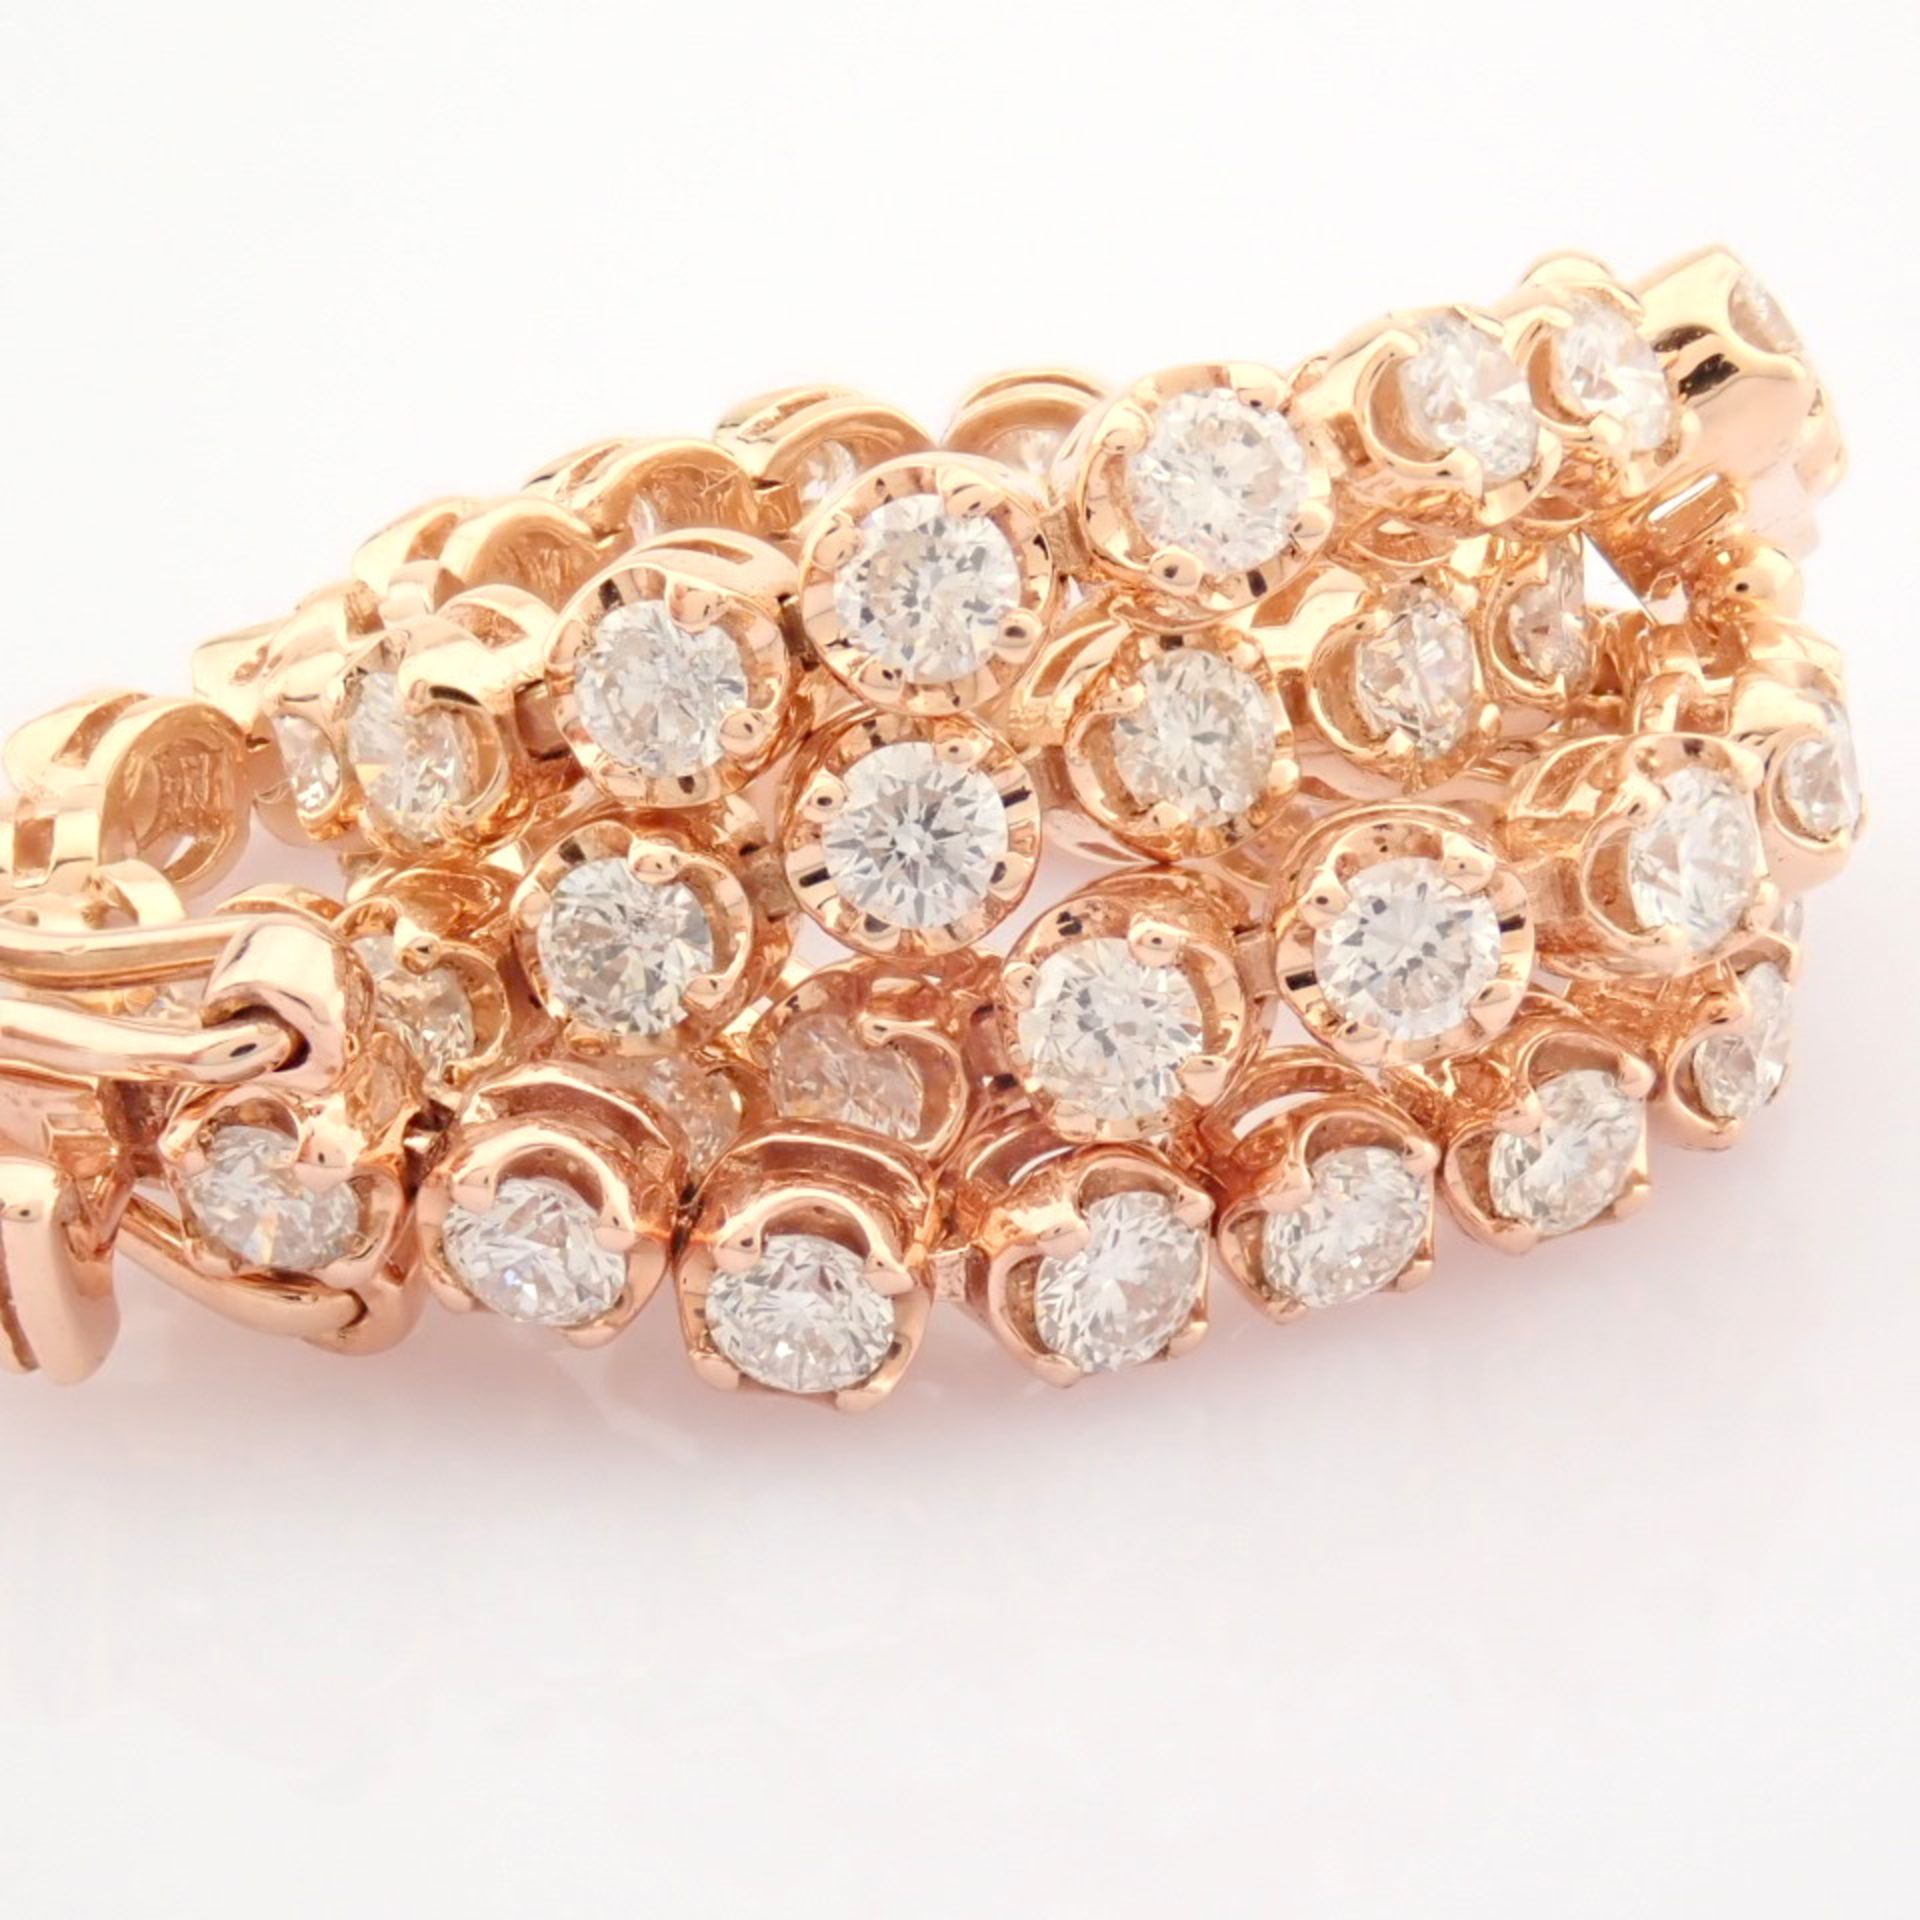 Certificated 14K Rose/Pink Gold Diamond Bracelet - Image 7 of 16